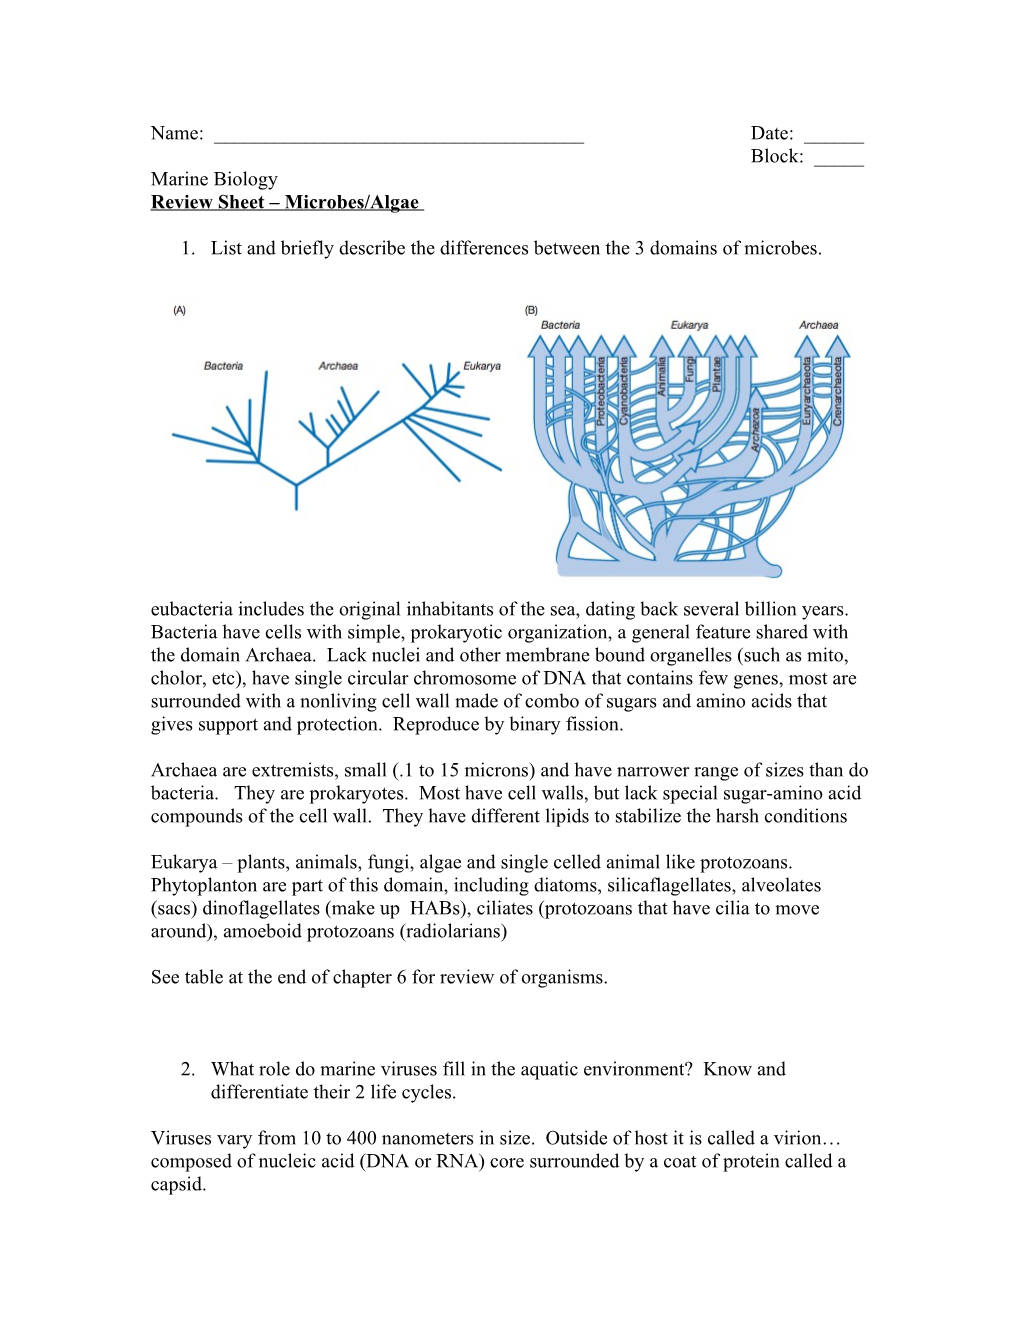 Review Sheet Microbes/Algae